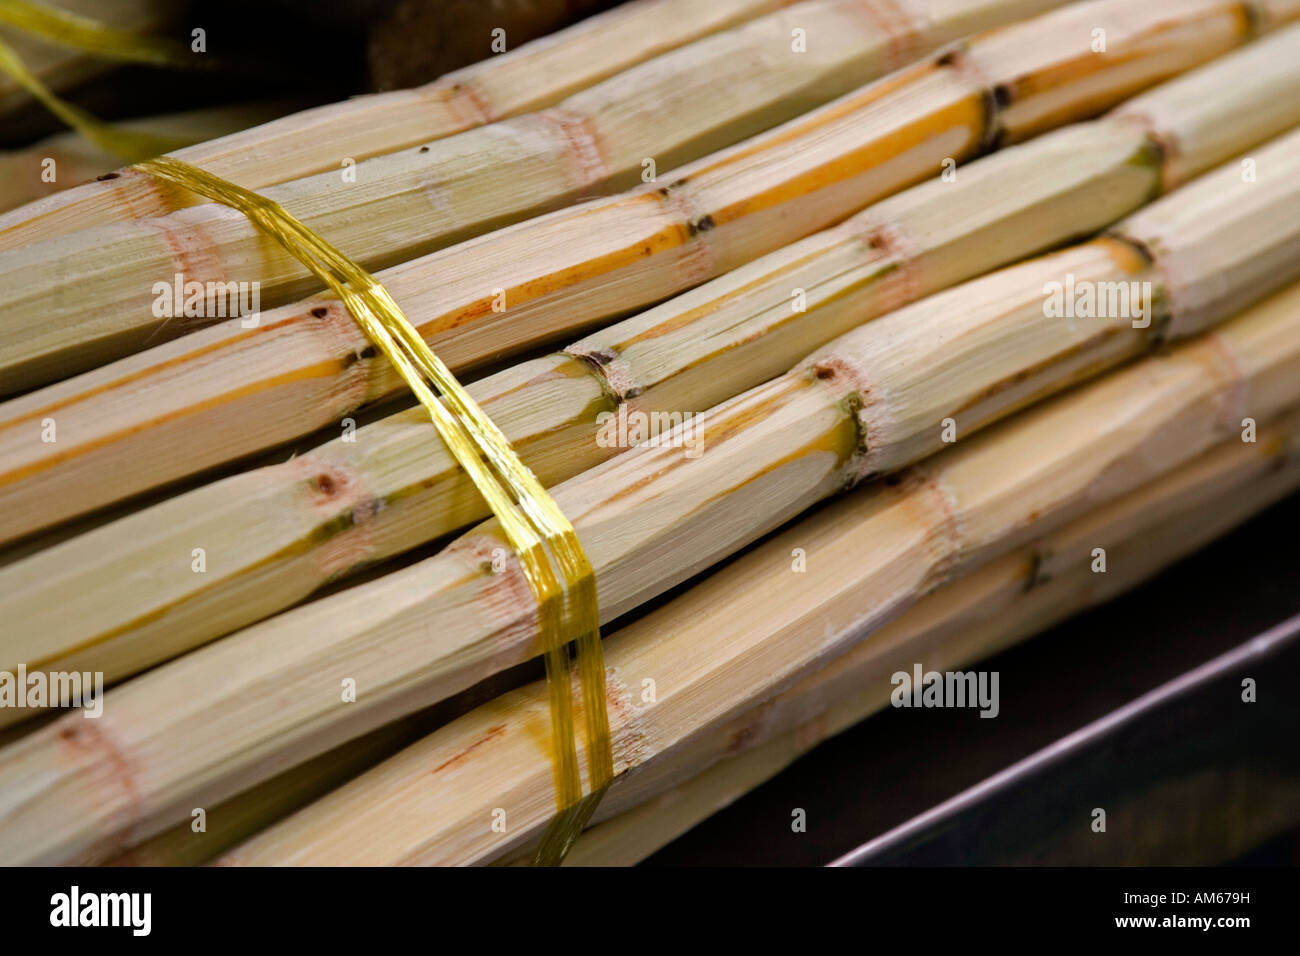 Sugarcane (Saccharum officinarum) Stock Photo